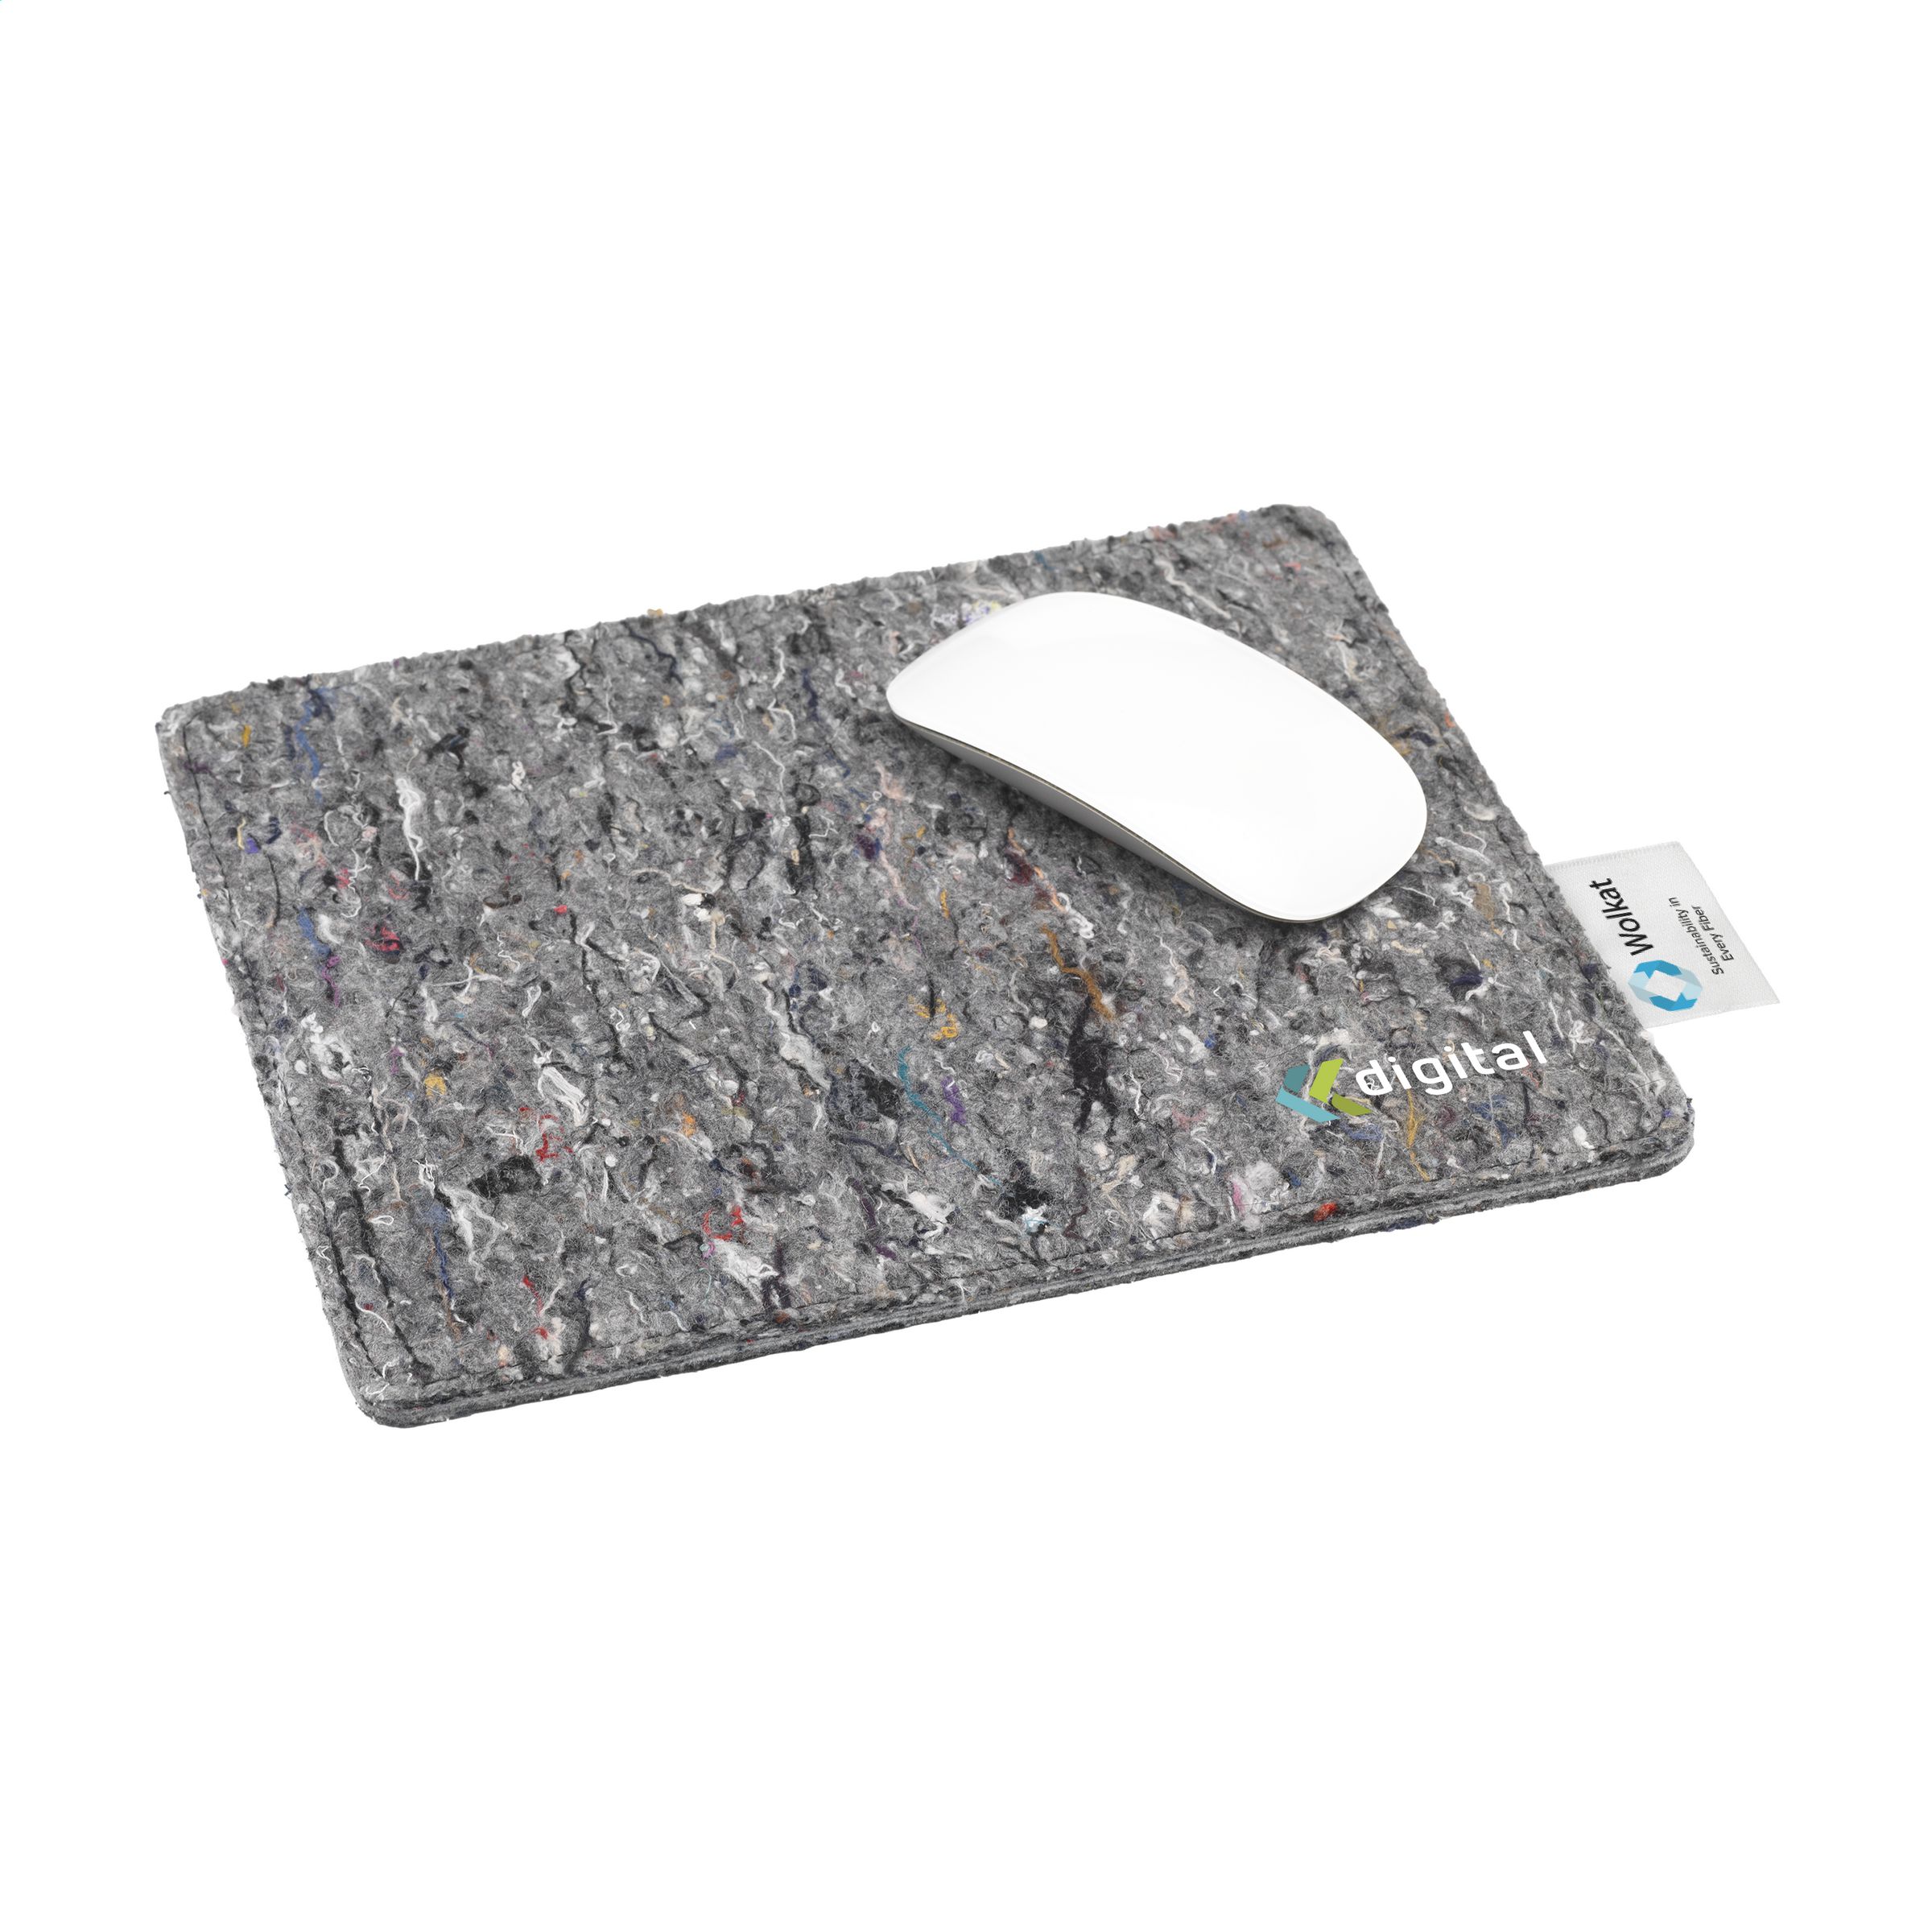 Mouse pad de fieltro de textil reciclado sostenible - East Budleigh